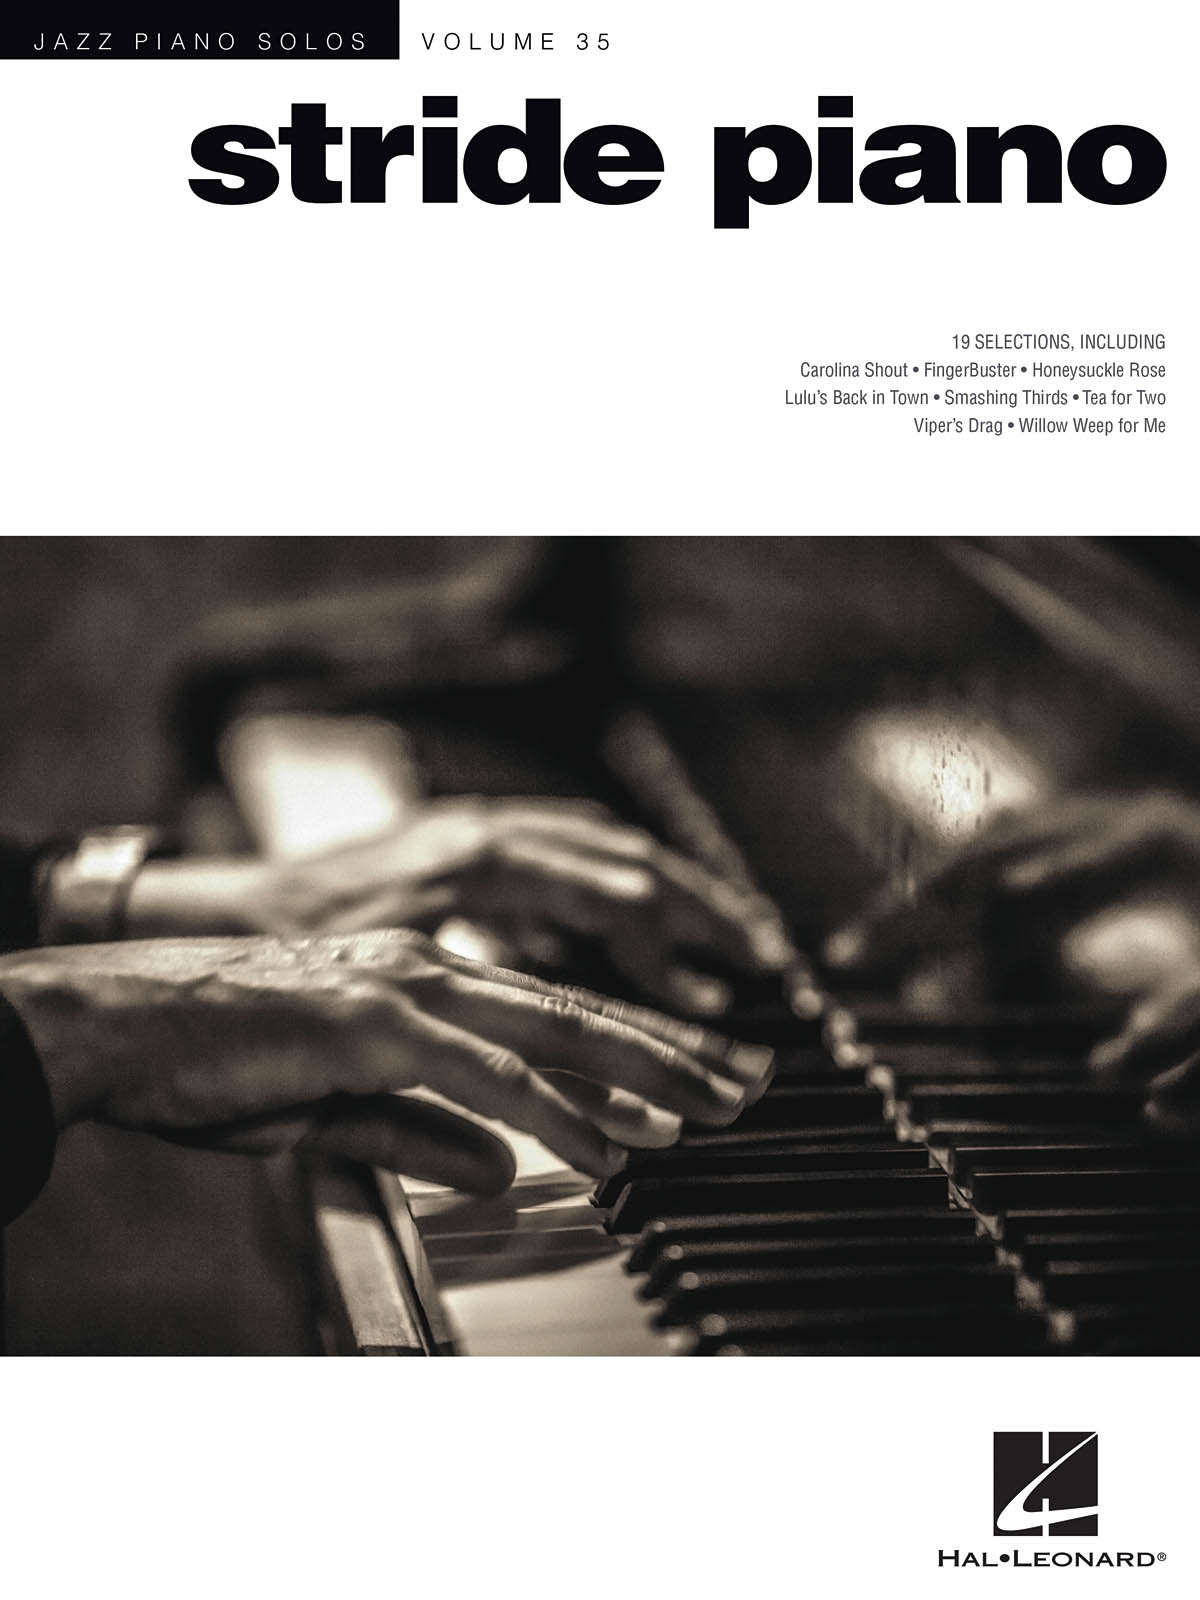 Stride Piano - Jazz Piano Solos Series Volume 35